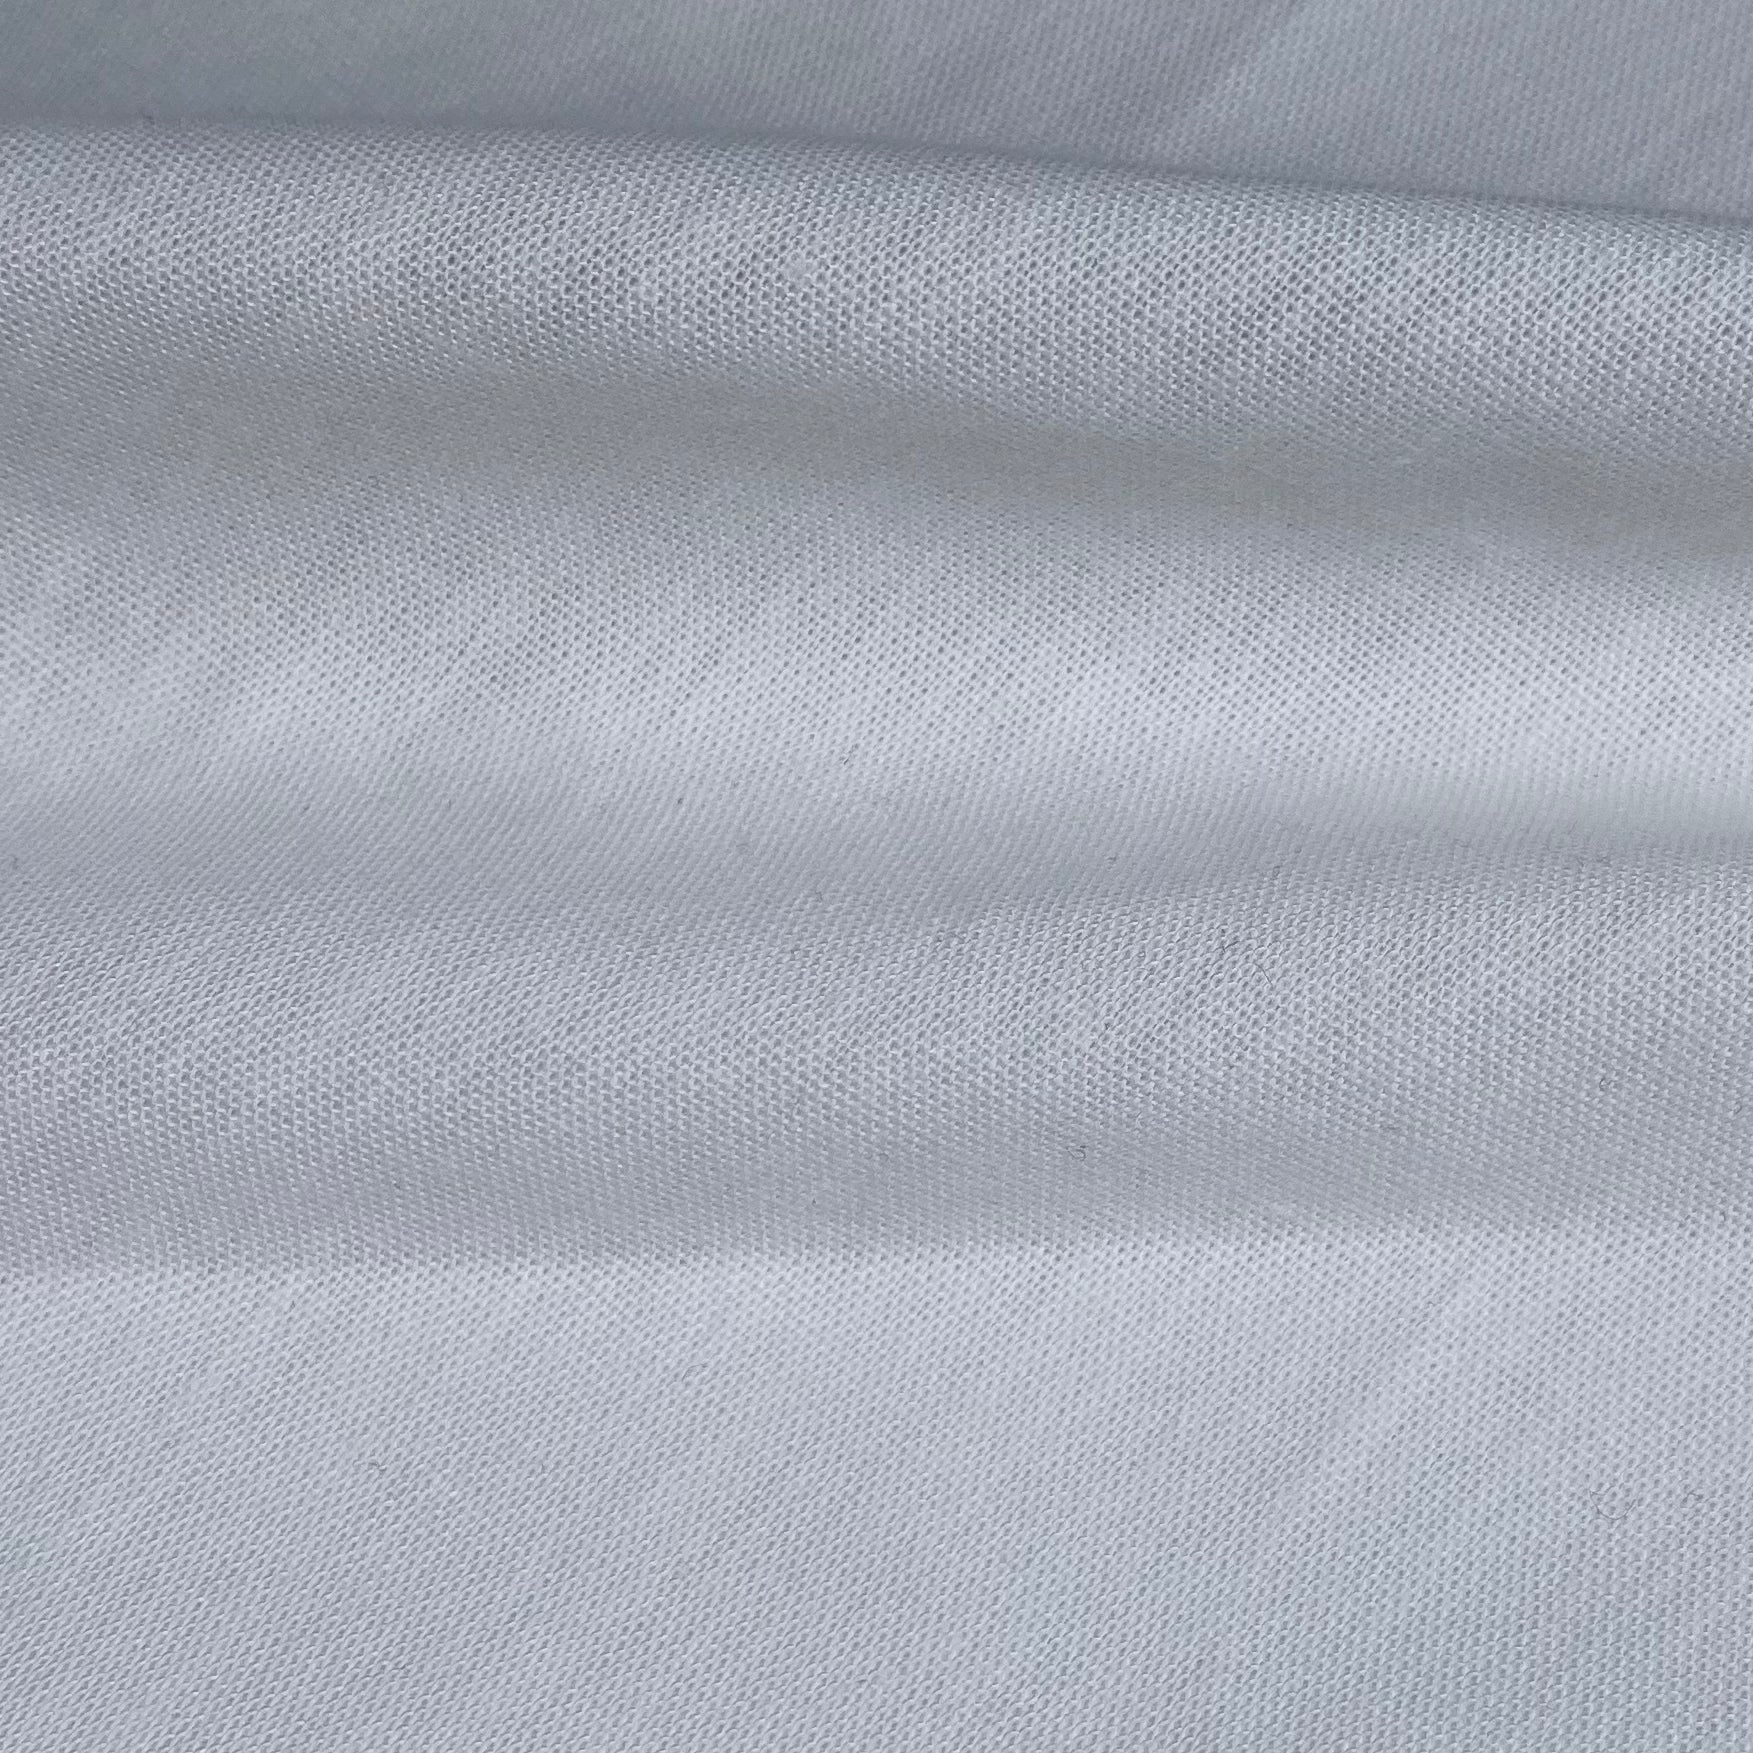 Woven Polyester - 4 oz - White